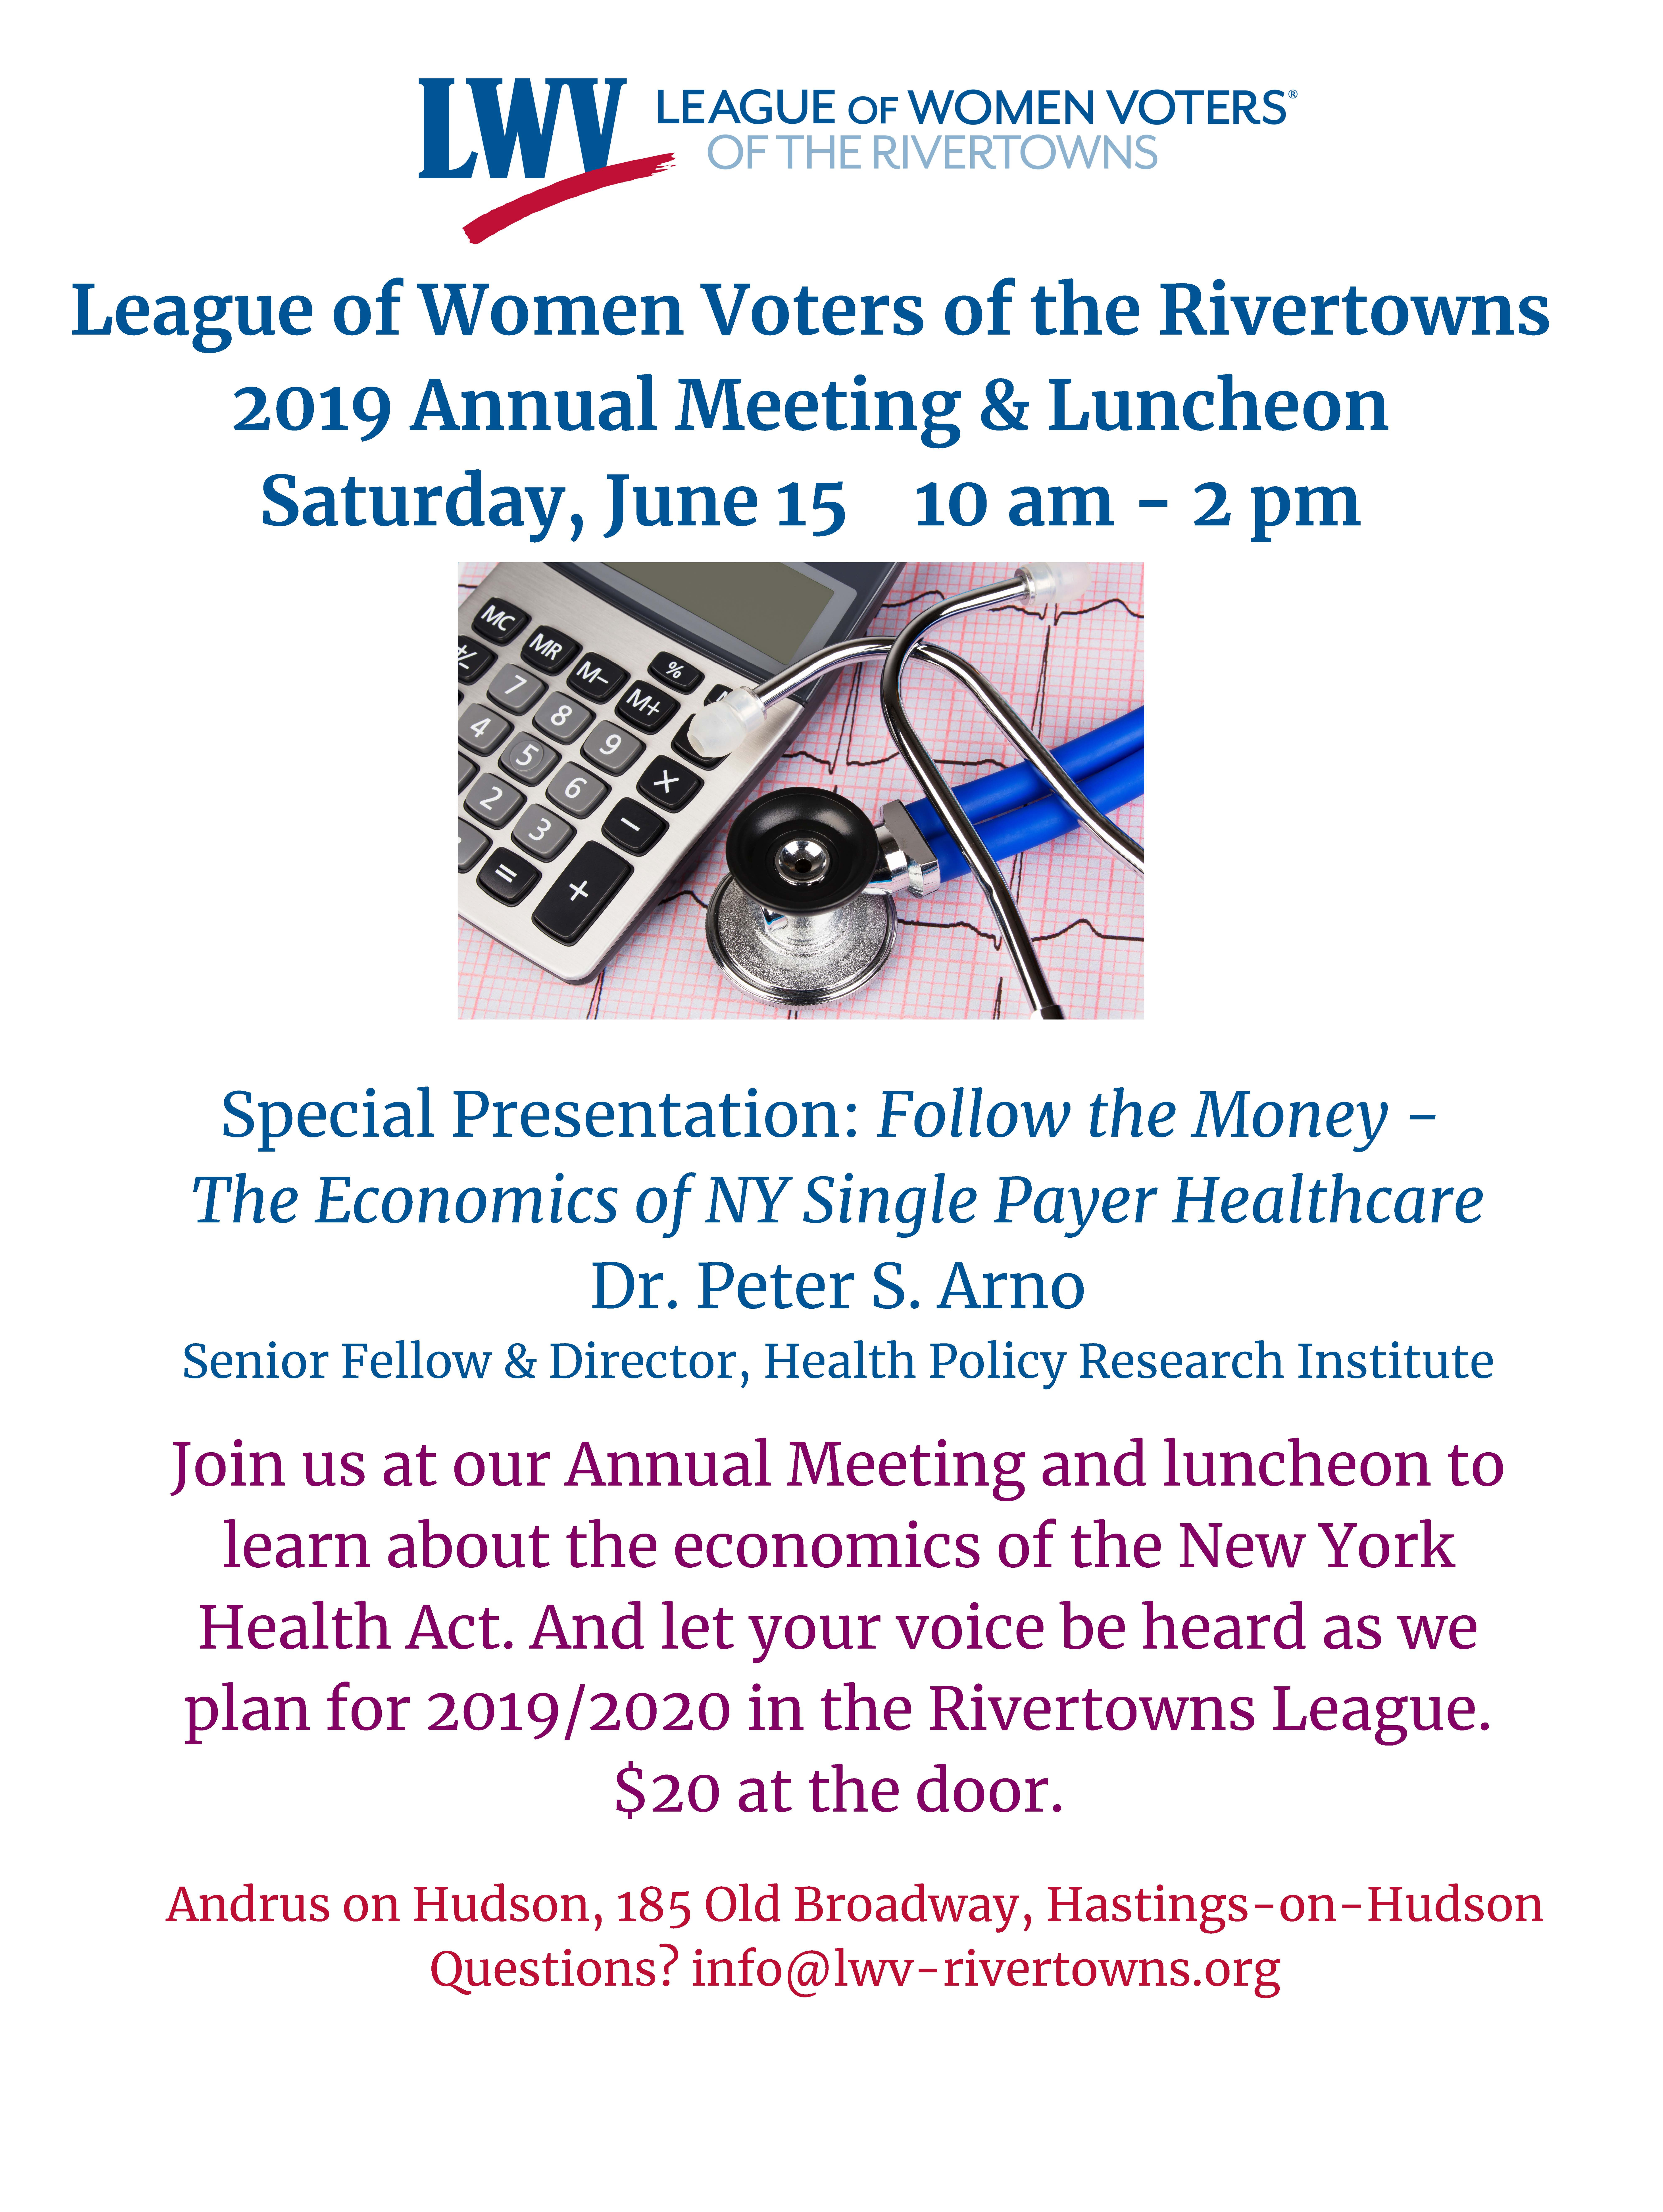 LWV Rivertowns Annual Meeting